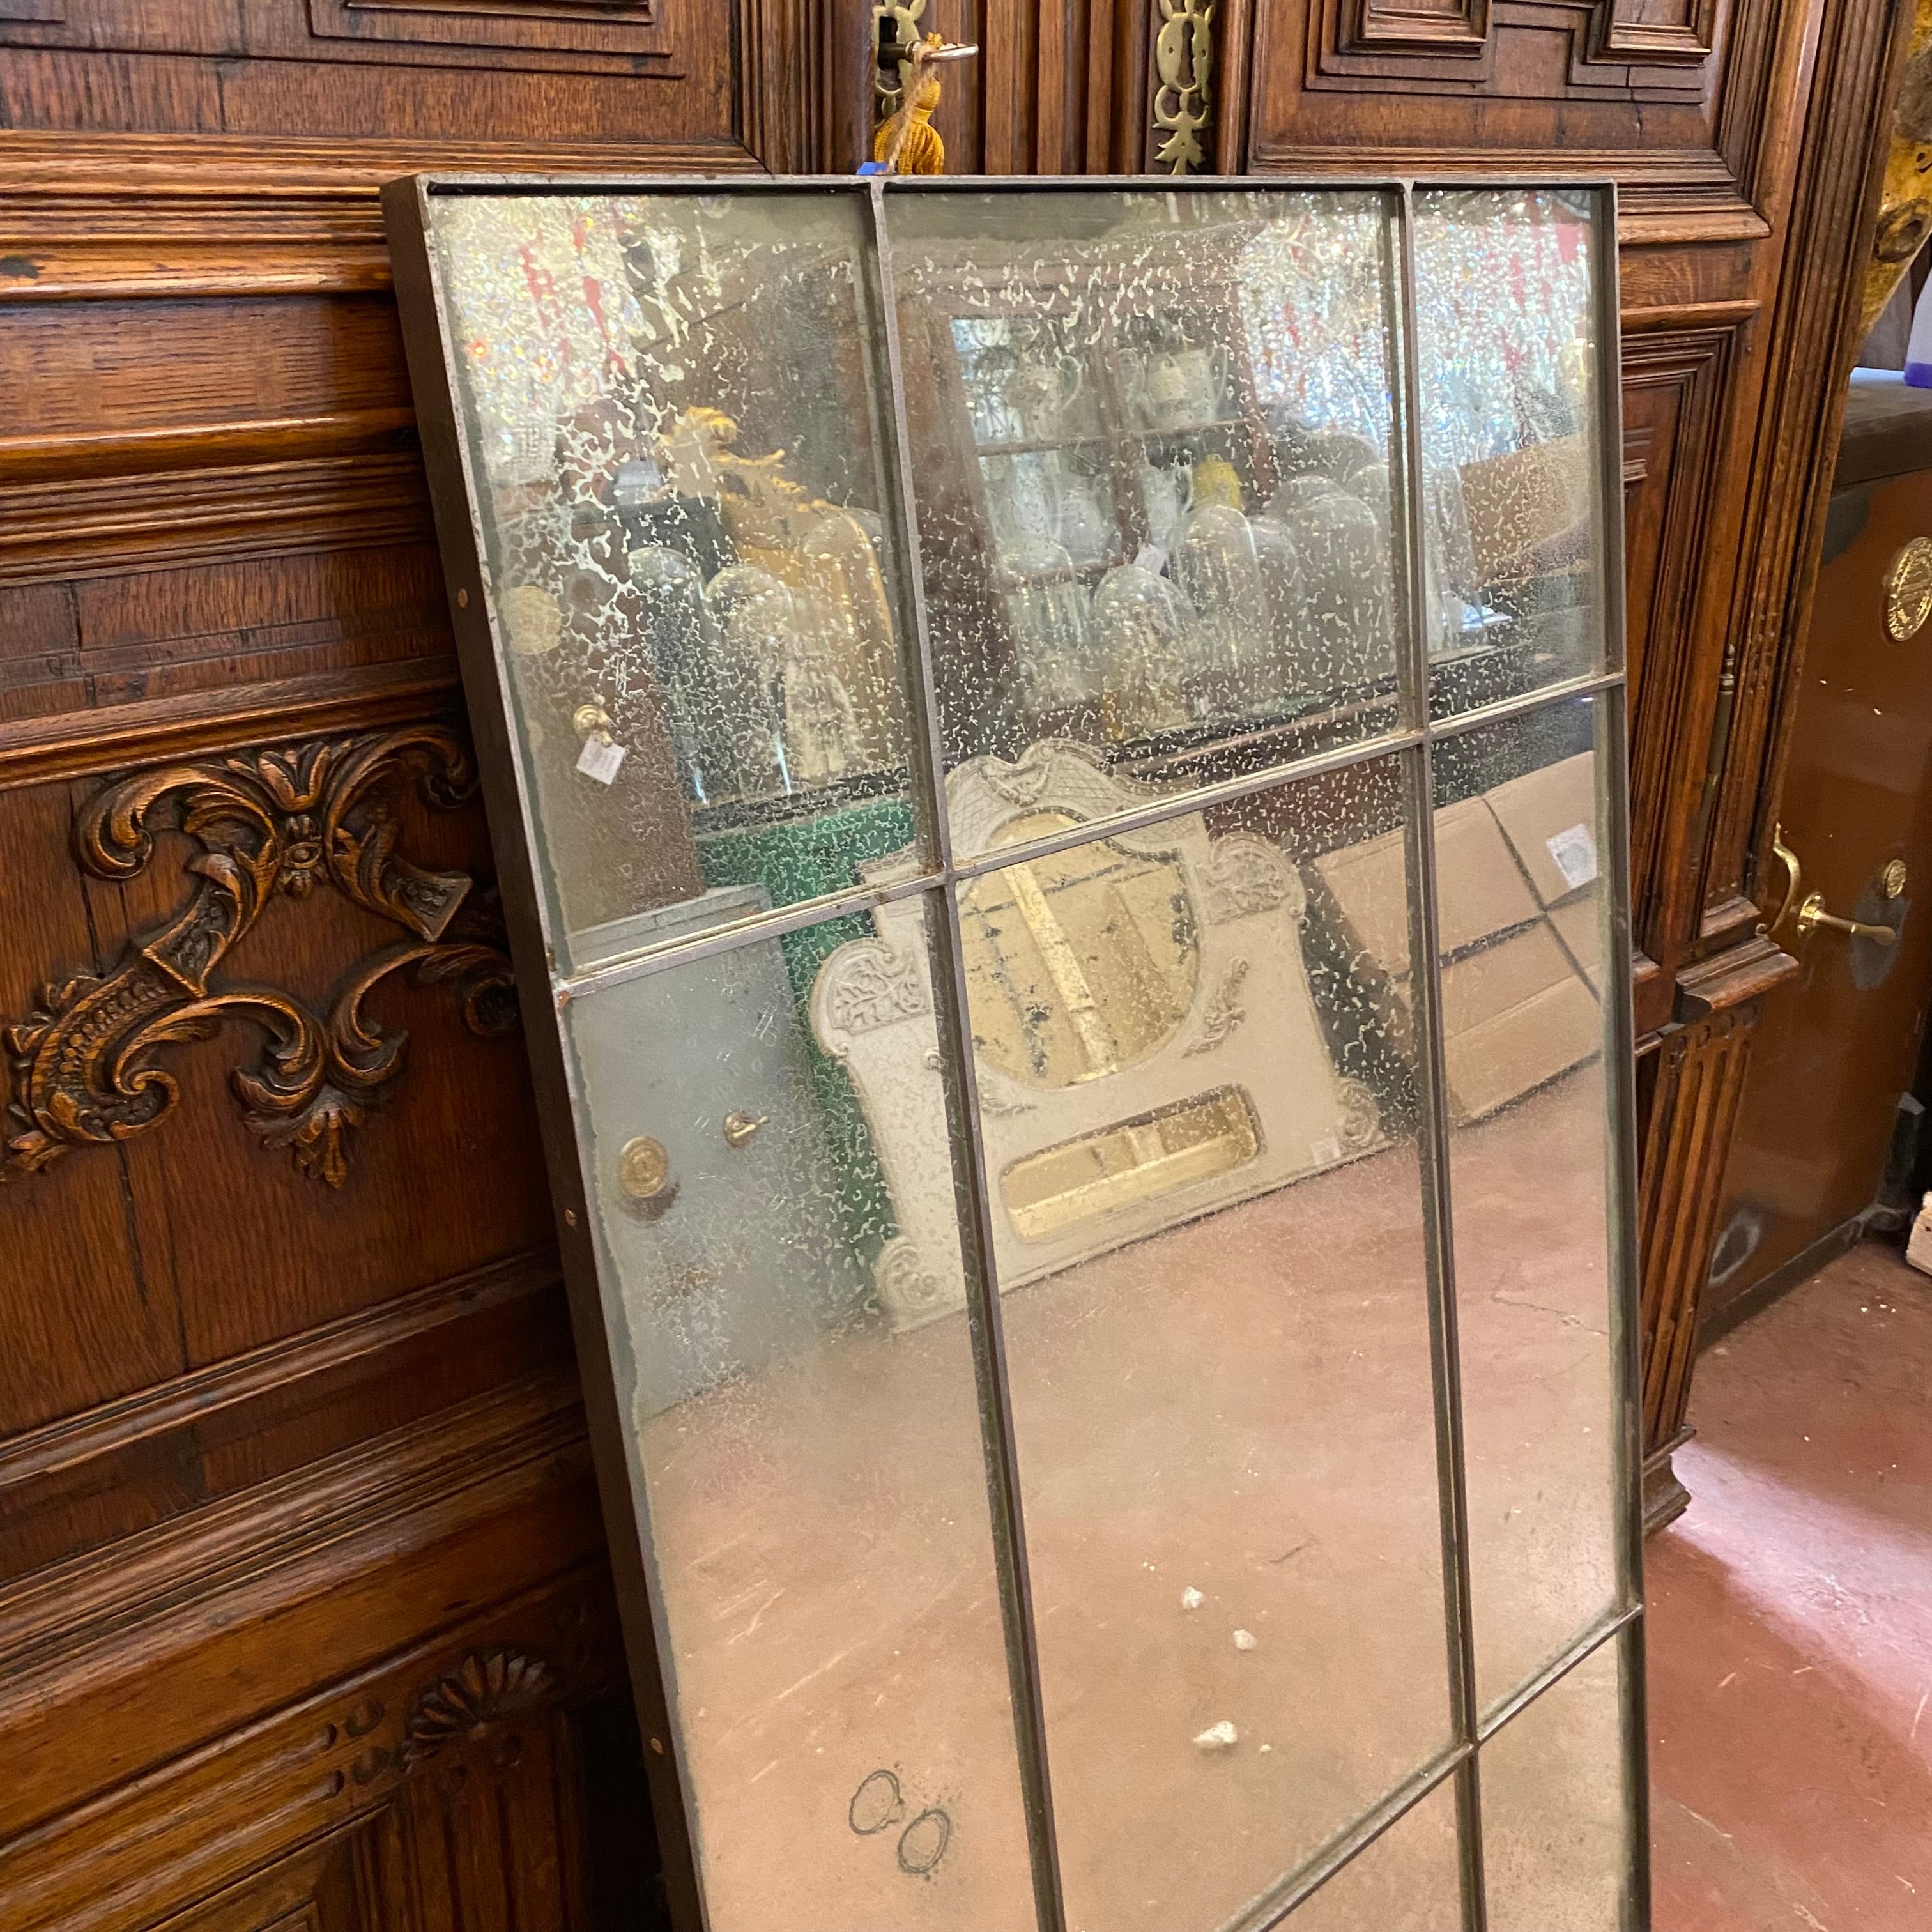 Aged Venetian Panel Mirror